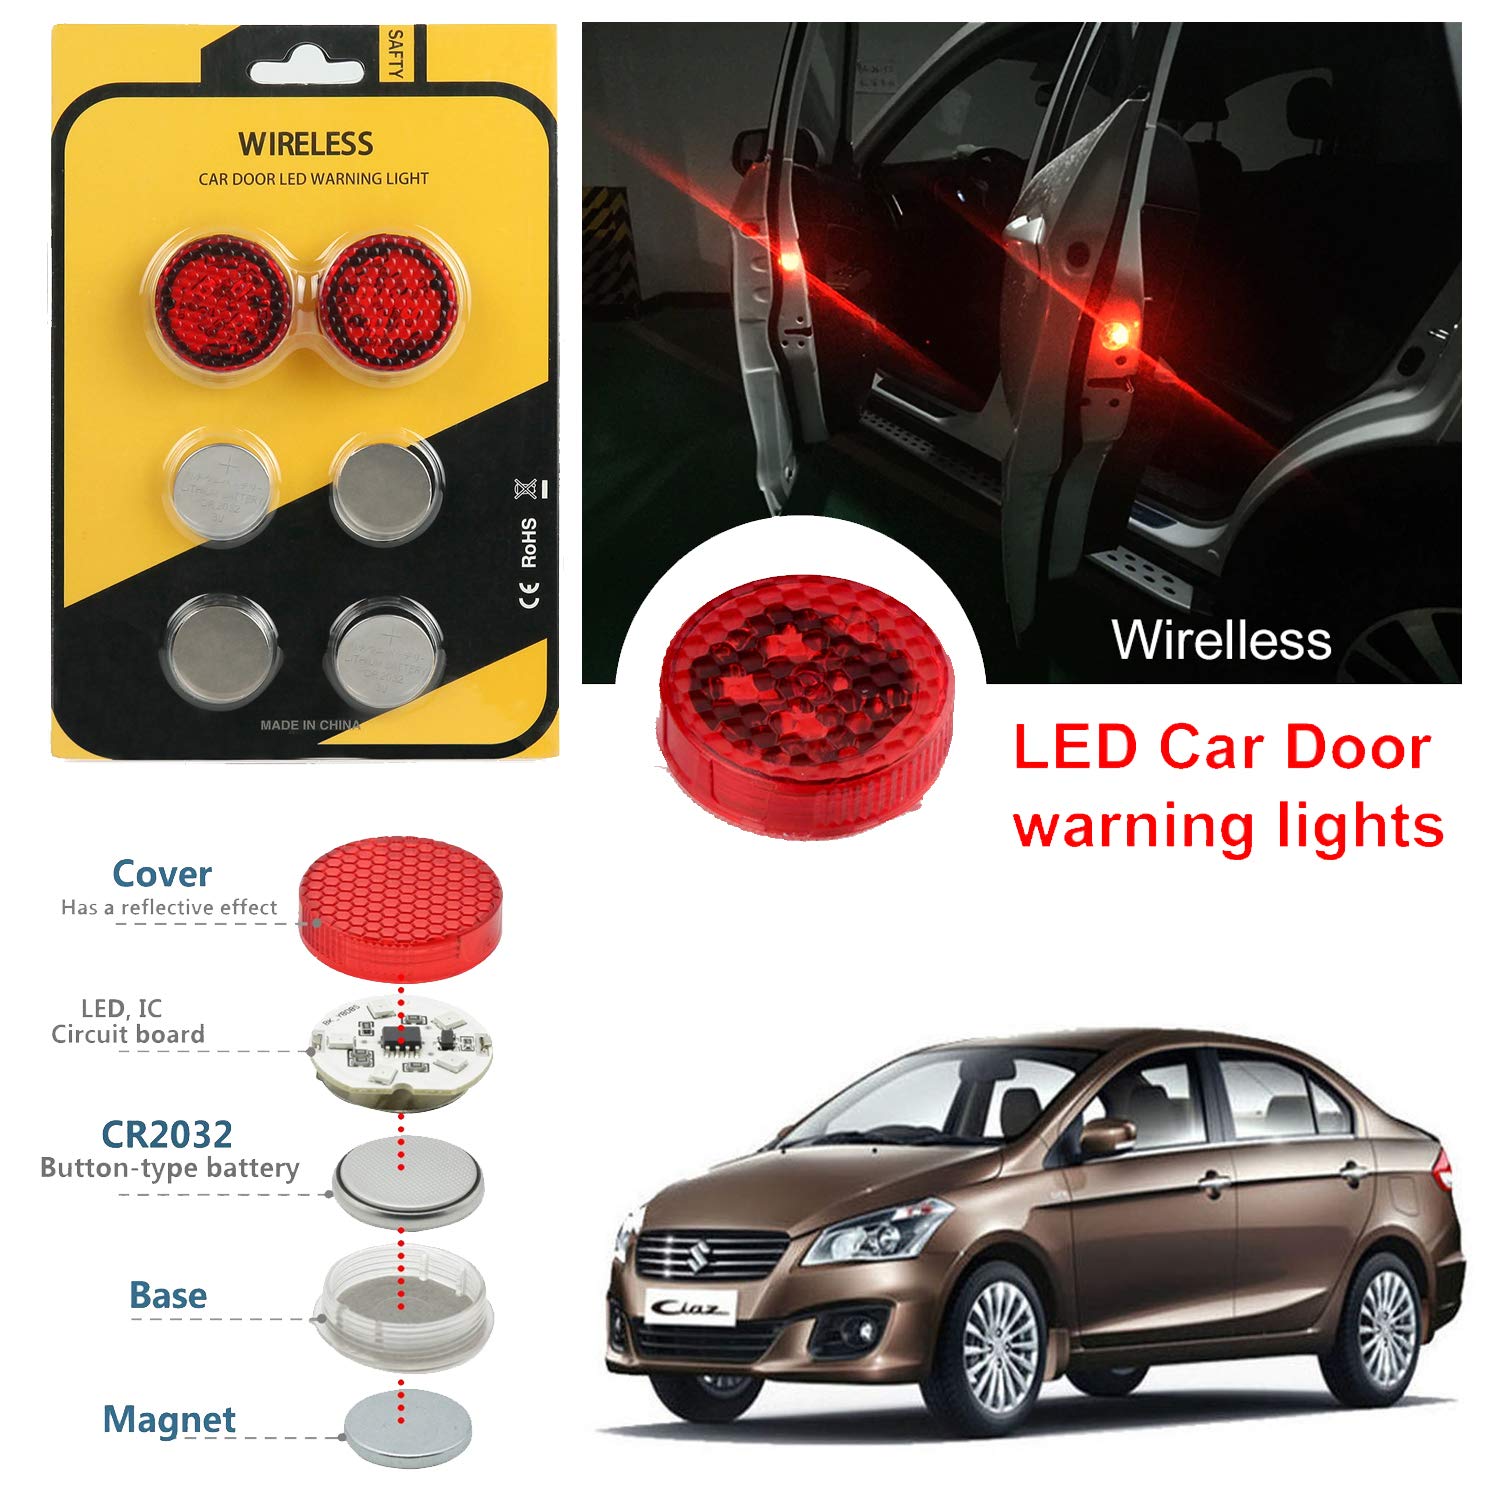 Components of Car Door LED Warning Light